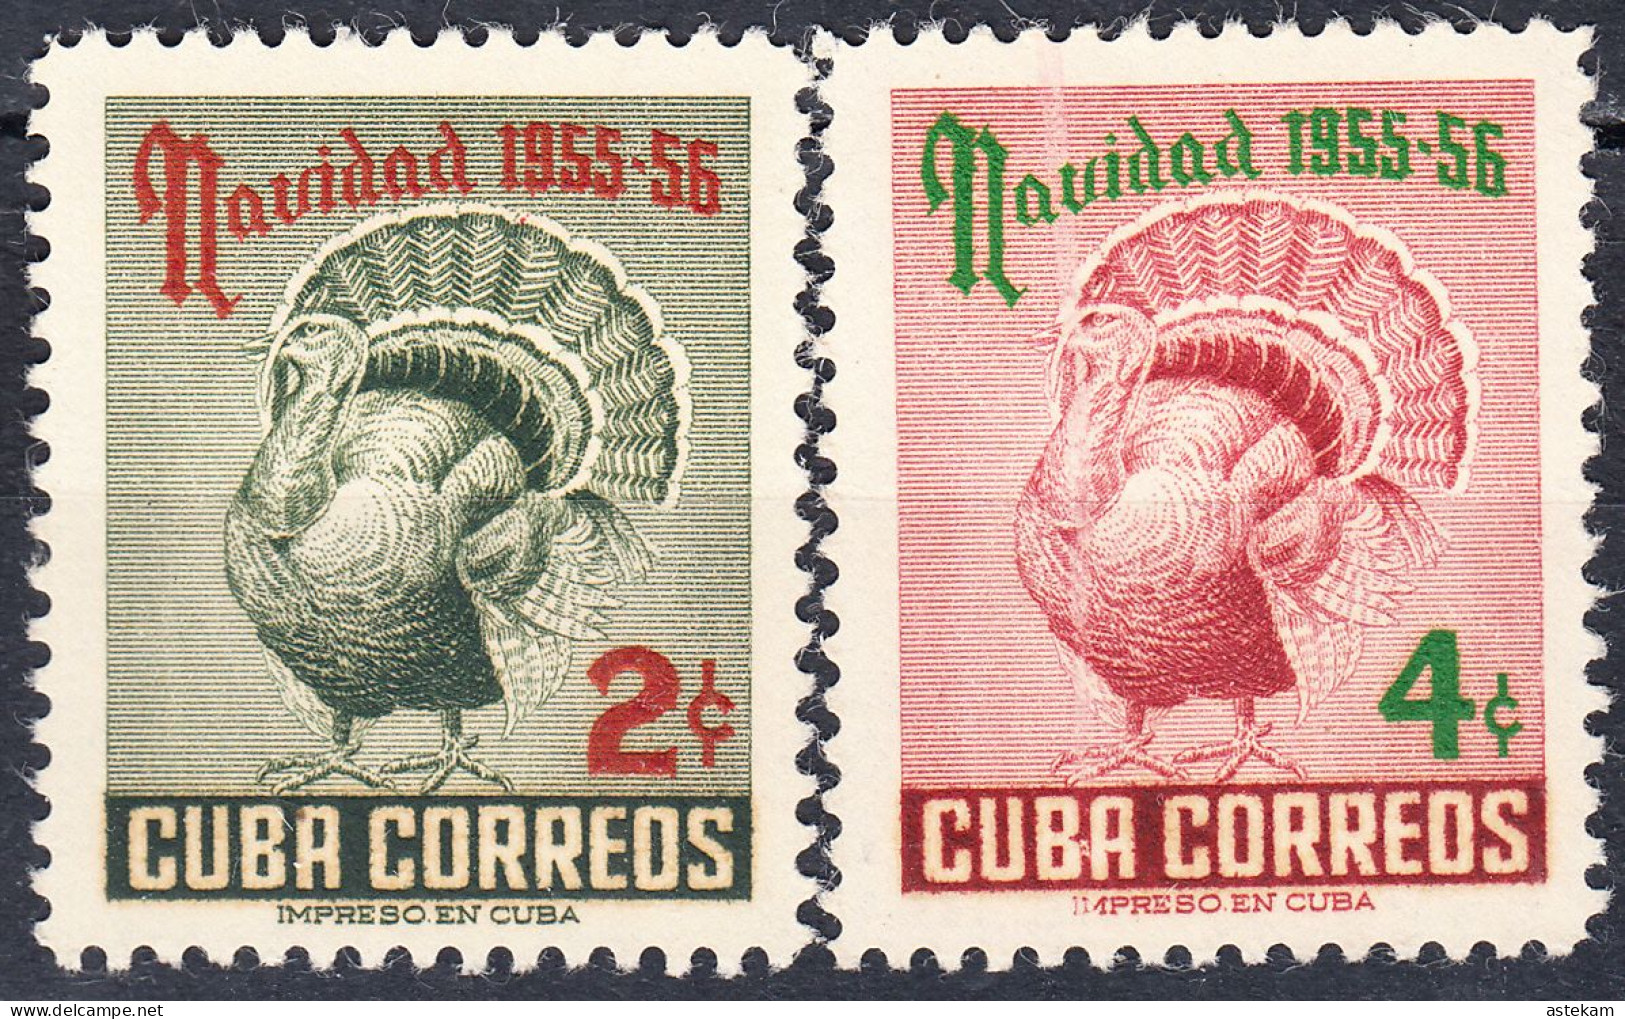 CUBA 1955, CHRISTMAS, BIRDS, A TURKEYS, COMPLETE, MNH SERIES With GOOD QUALITY, *** - Ungebraucht